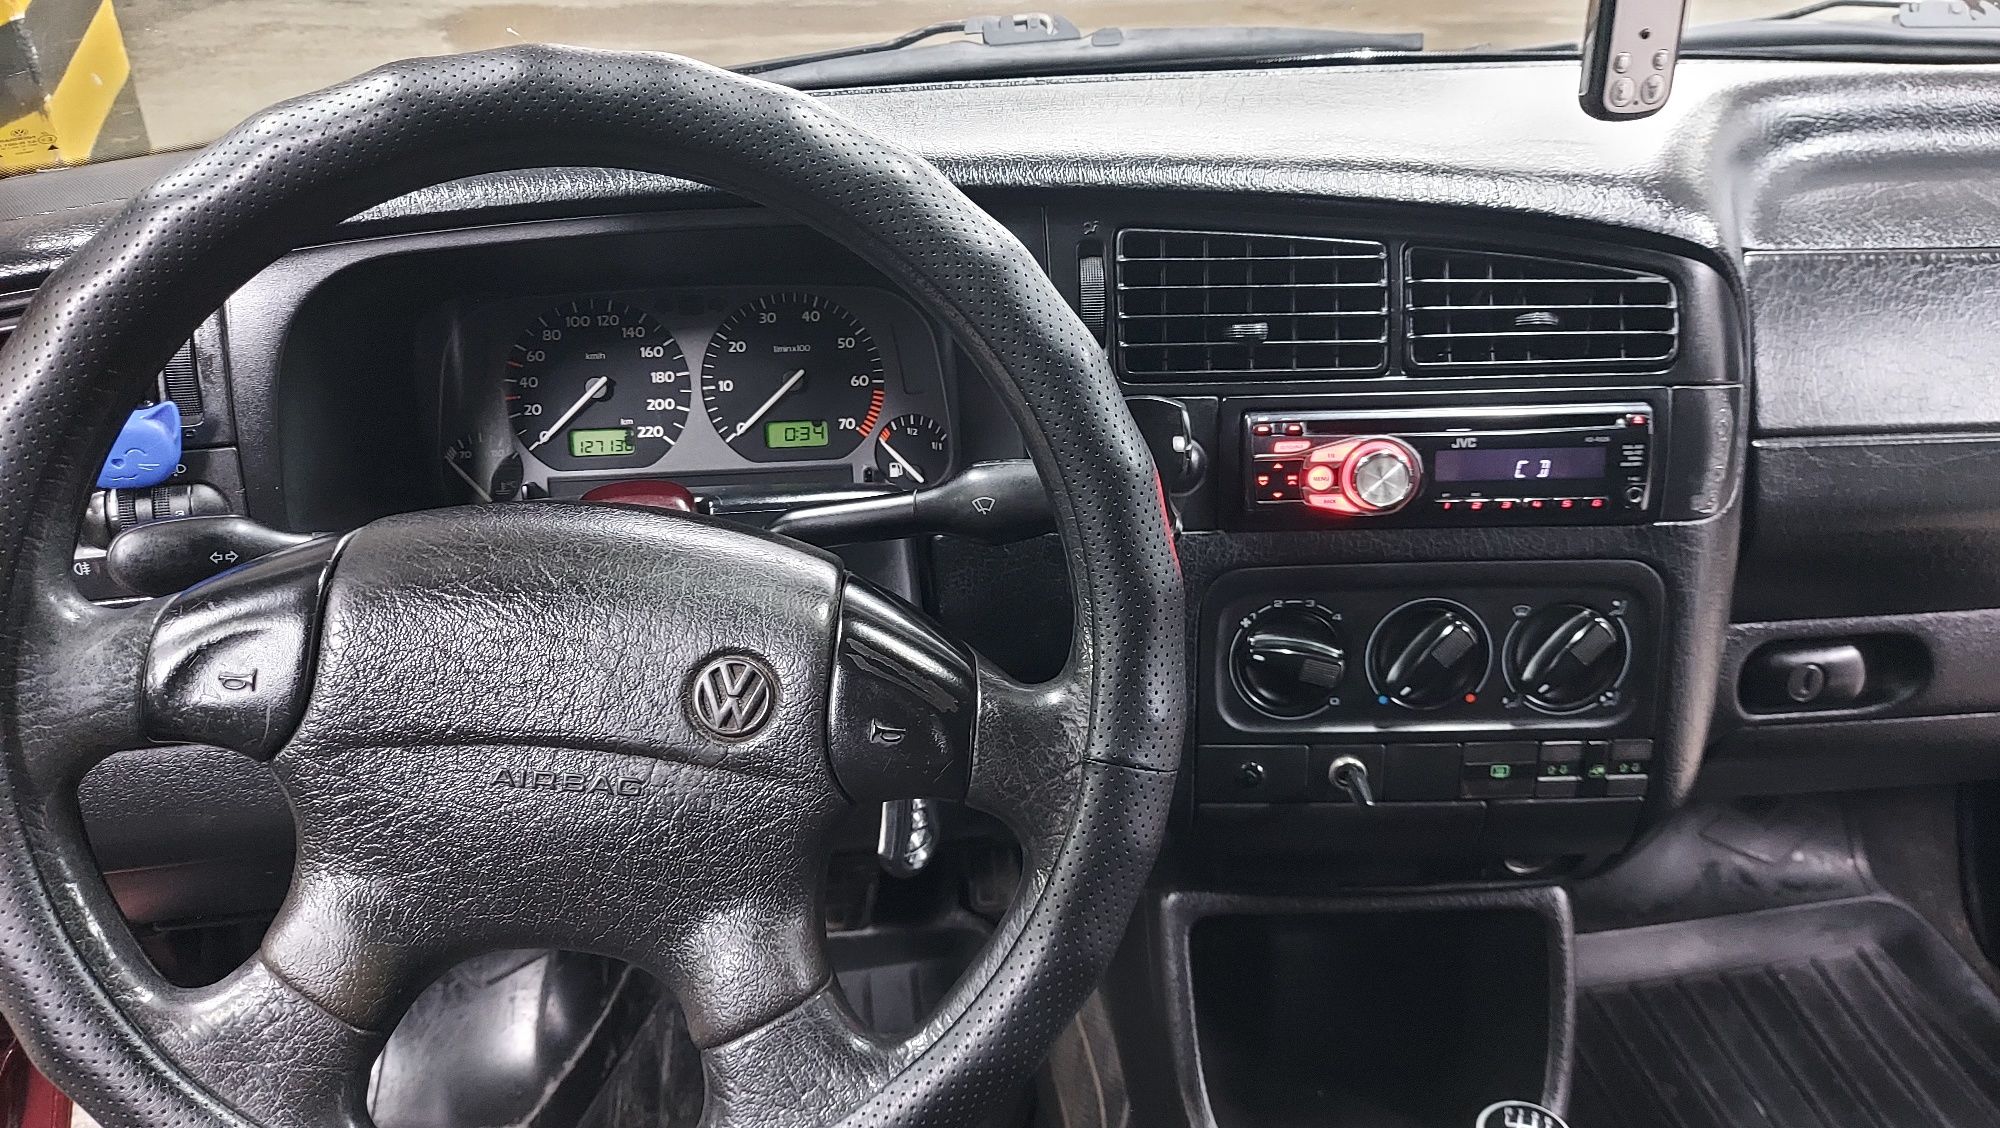 Продам Volkswagen Golf 1995г